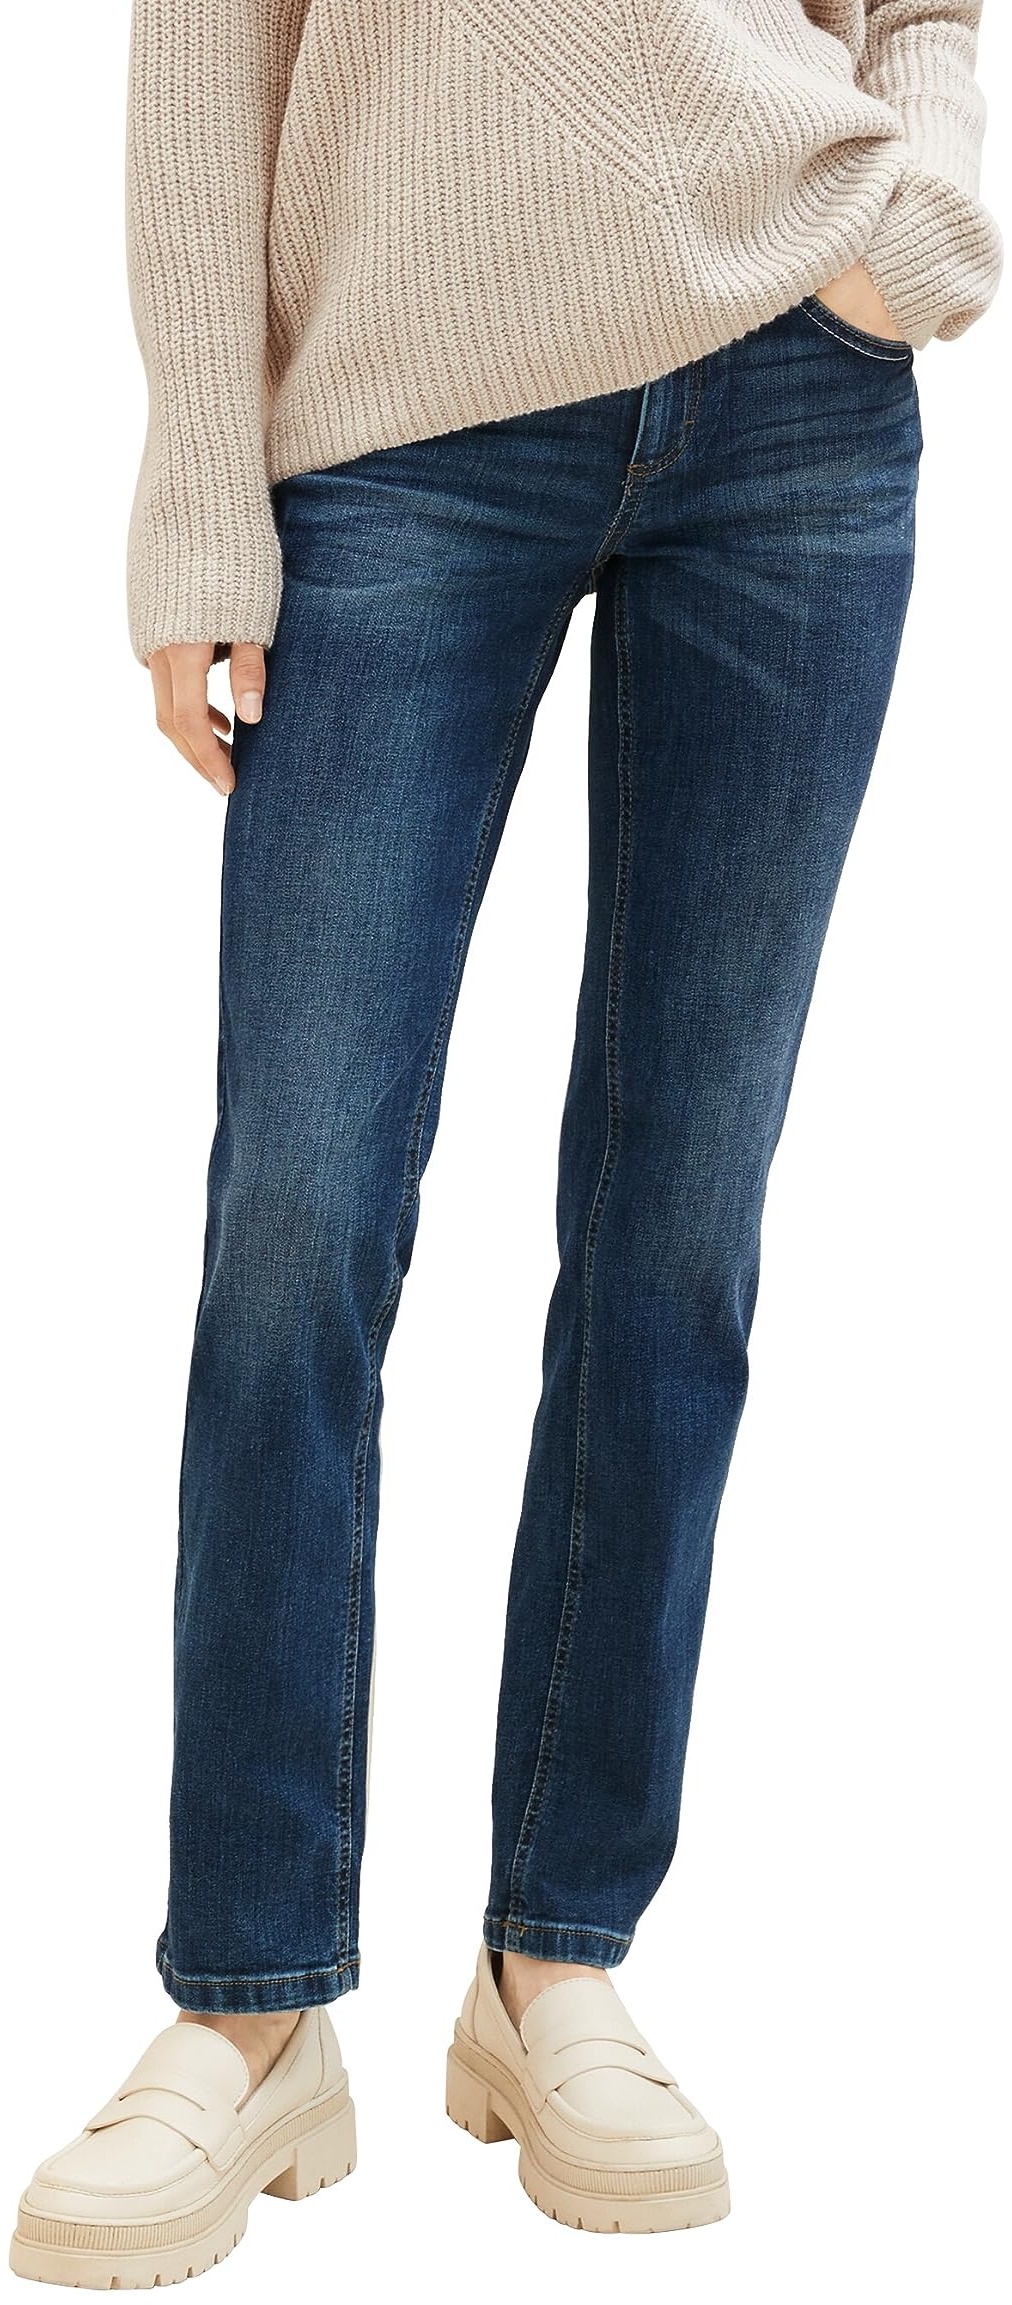 TOM TAILOR Damen 1008119 Alexa Straight Jeans, 10281 - Mid Stone Wash Denim, 30W / 34L EU